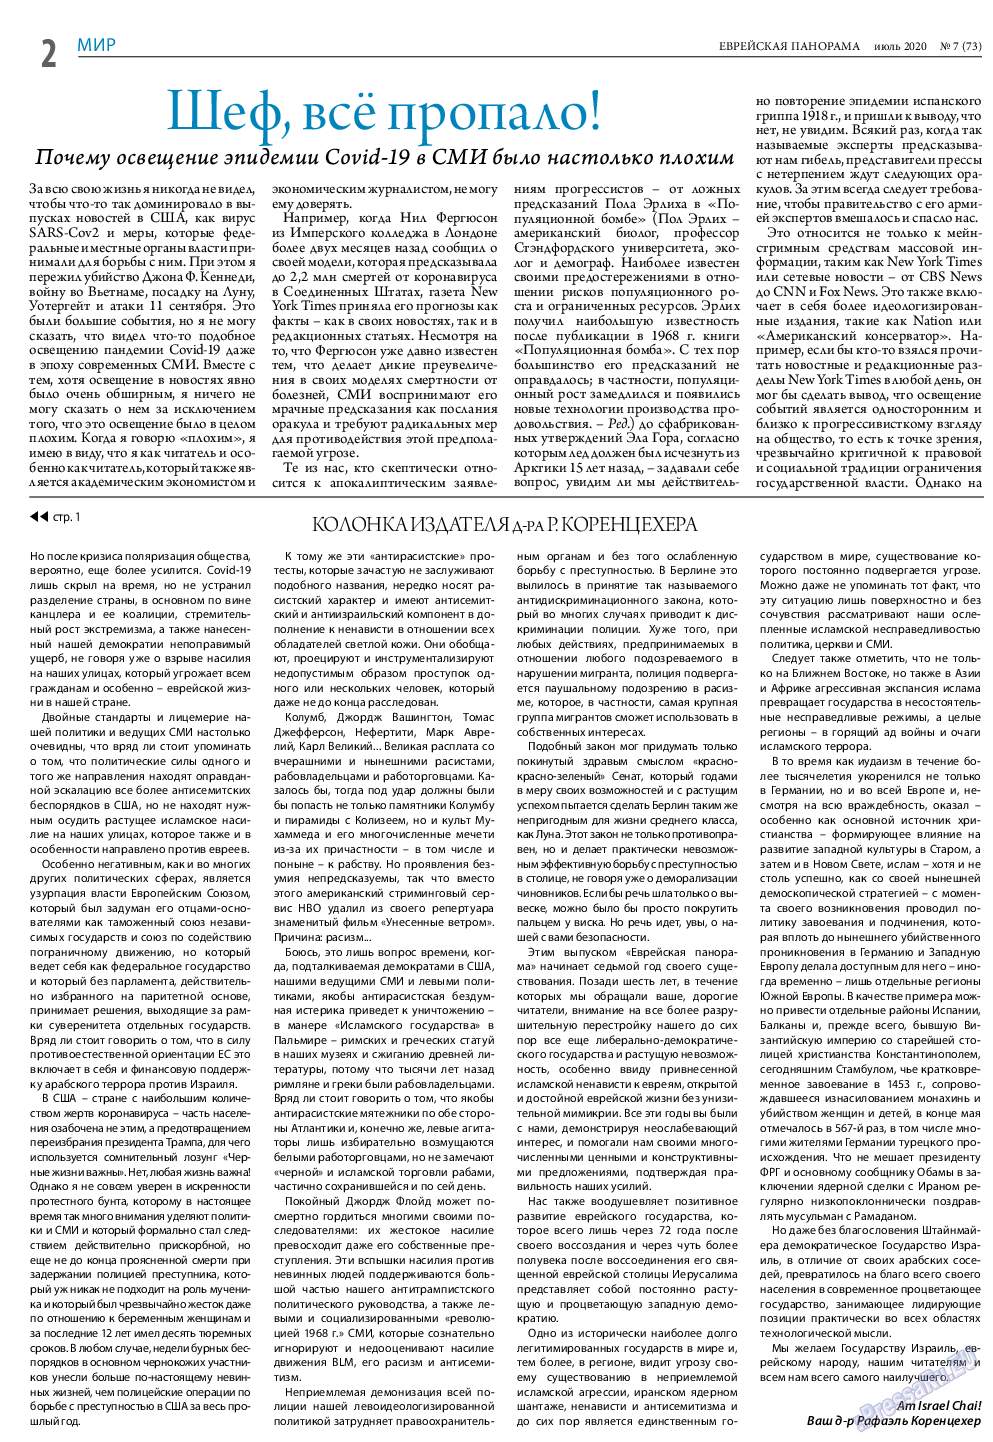 Еврейская панорама, газета. 2020 №7 стр.2